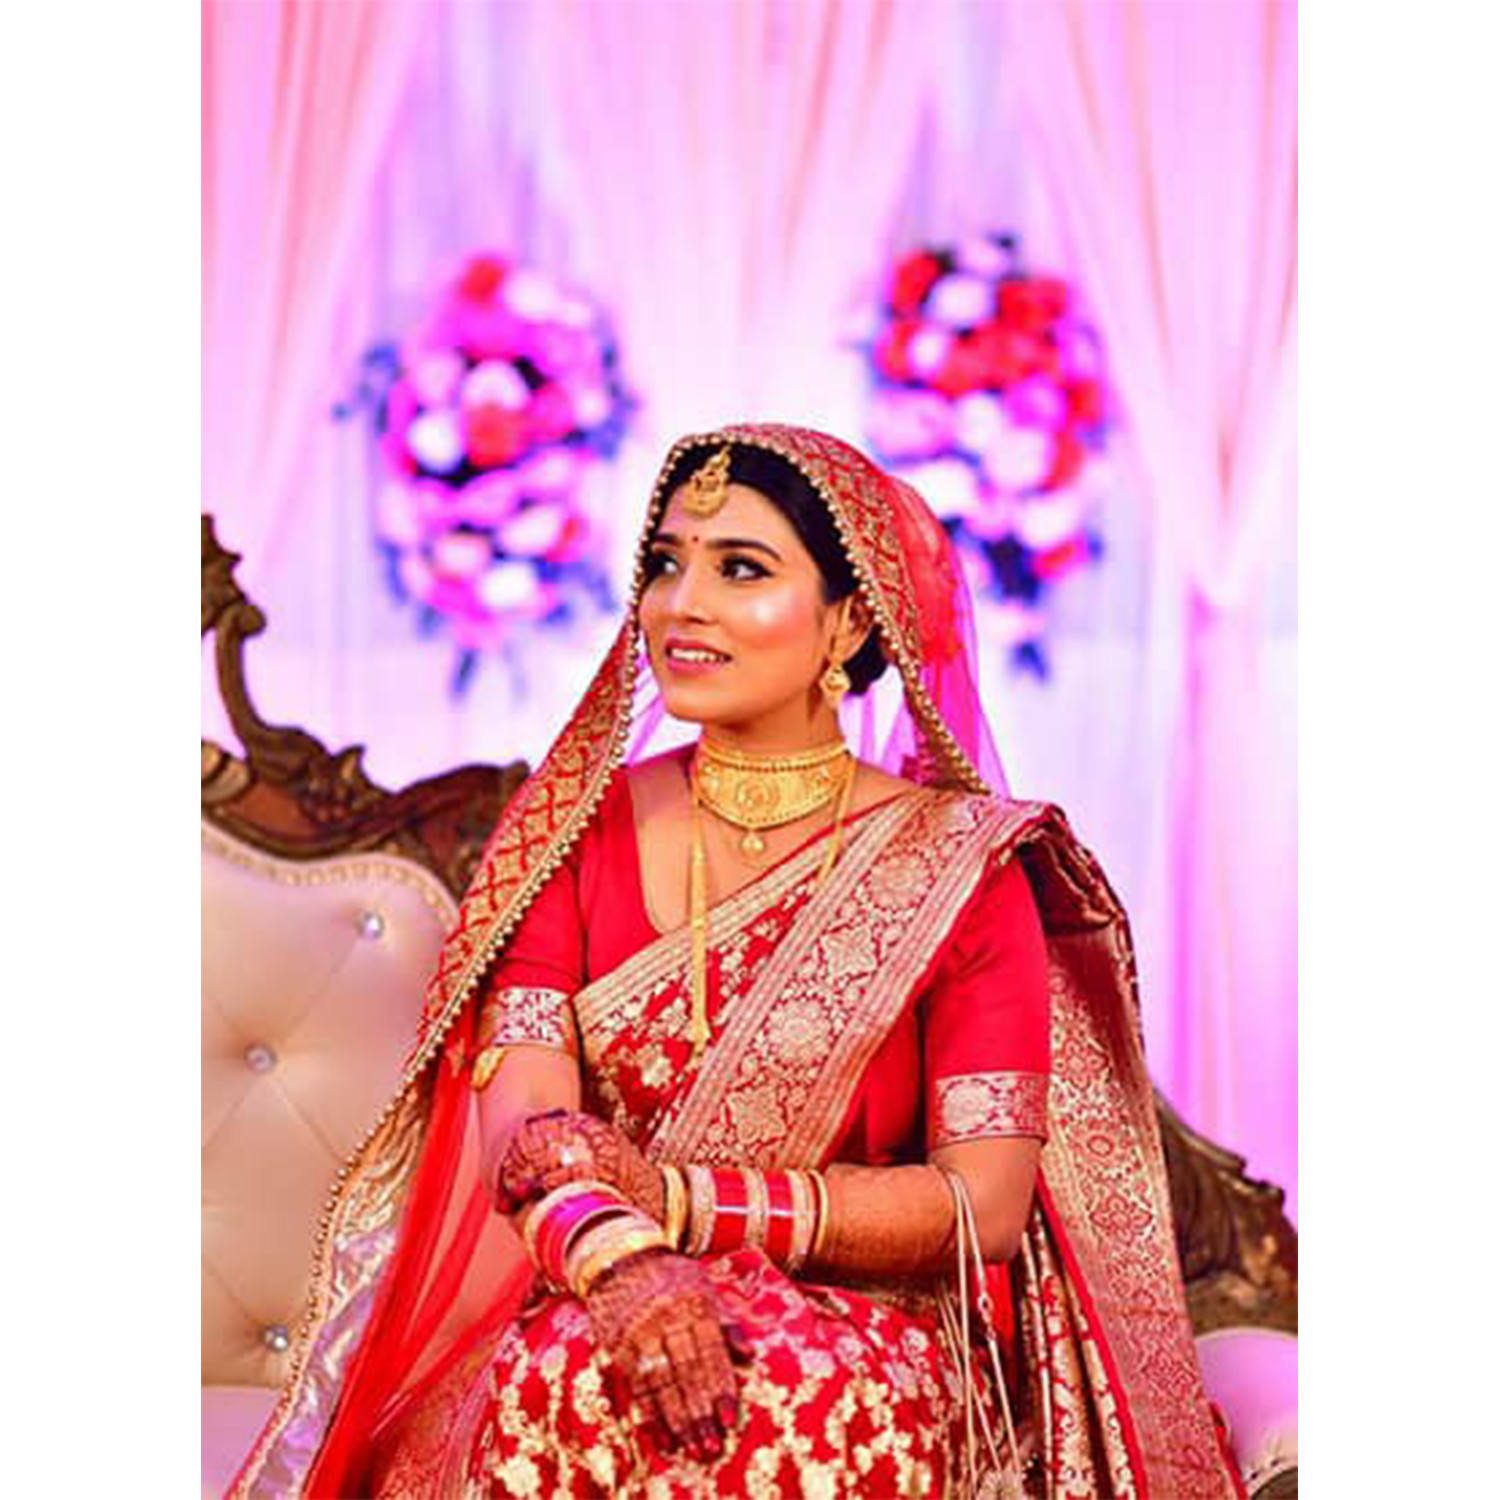 Delhi Wedding With A Bride In A Pink Bridal Lehenga & Traditional Doli!